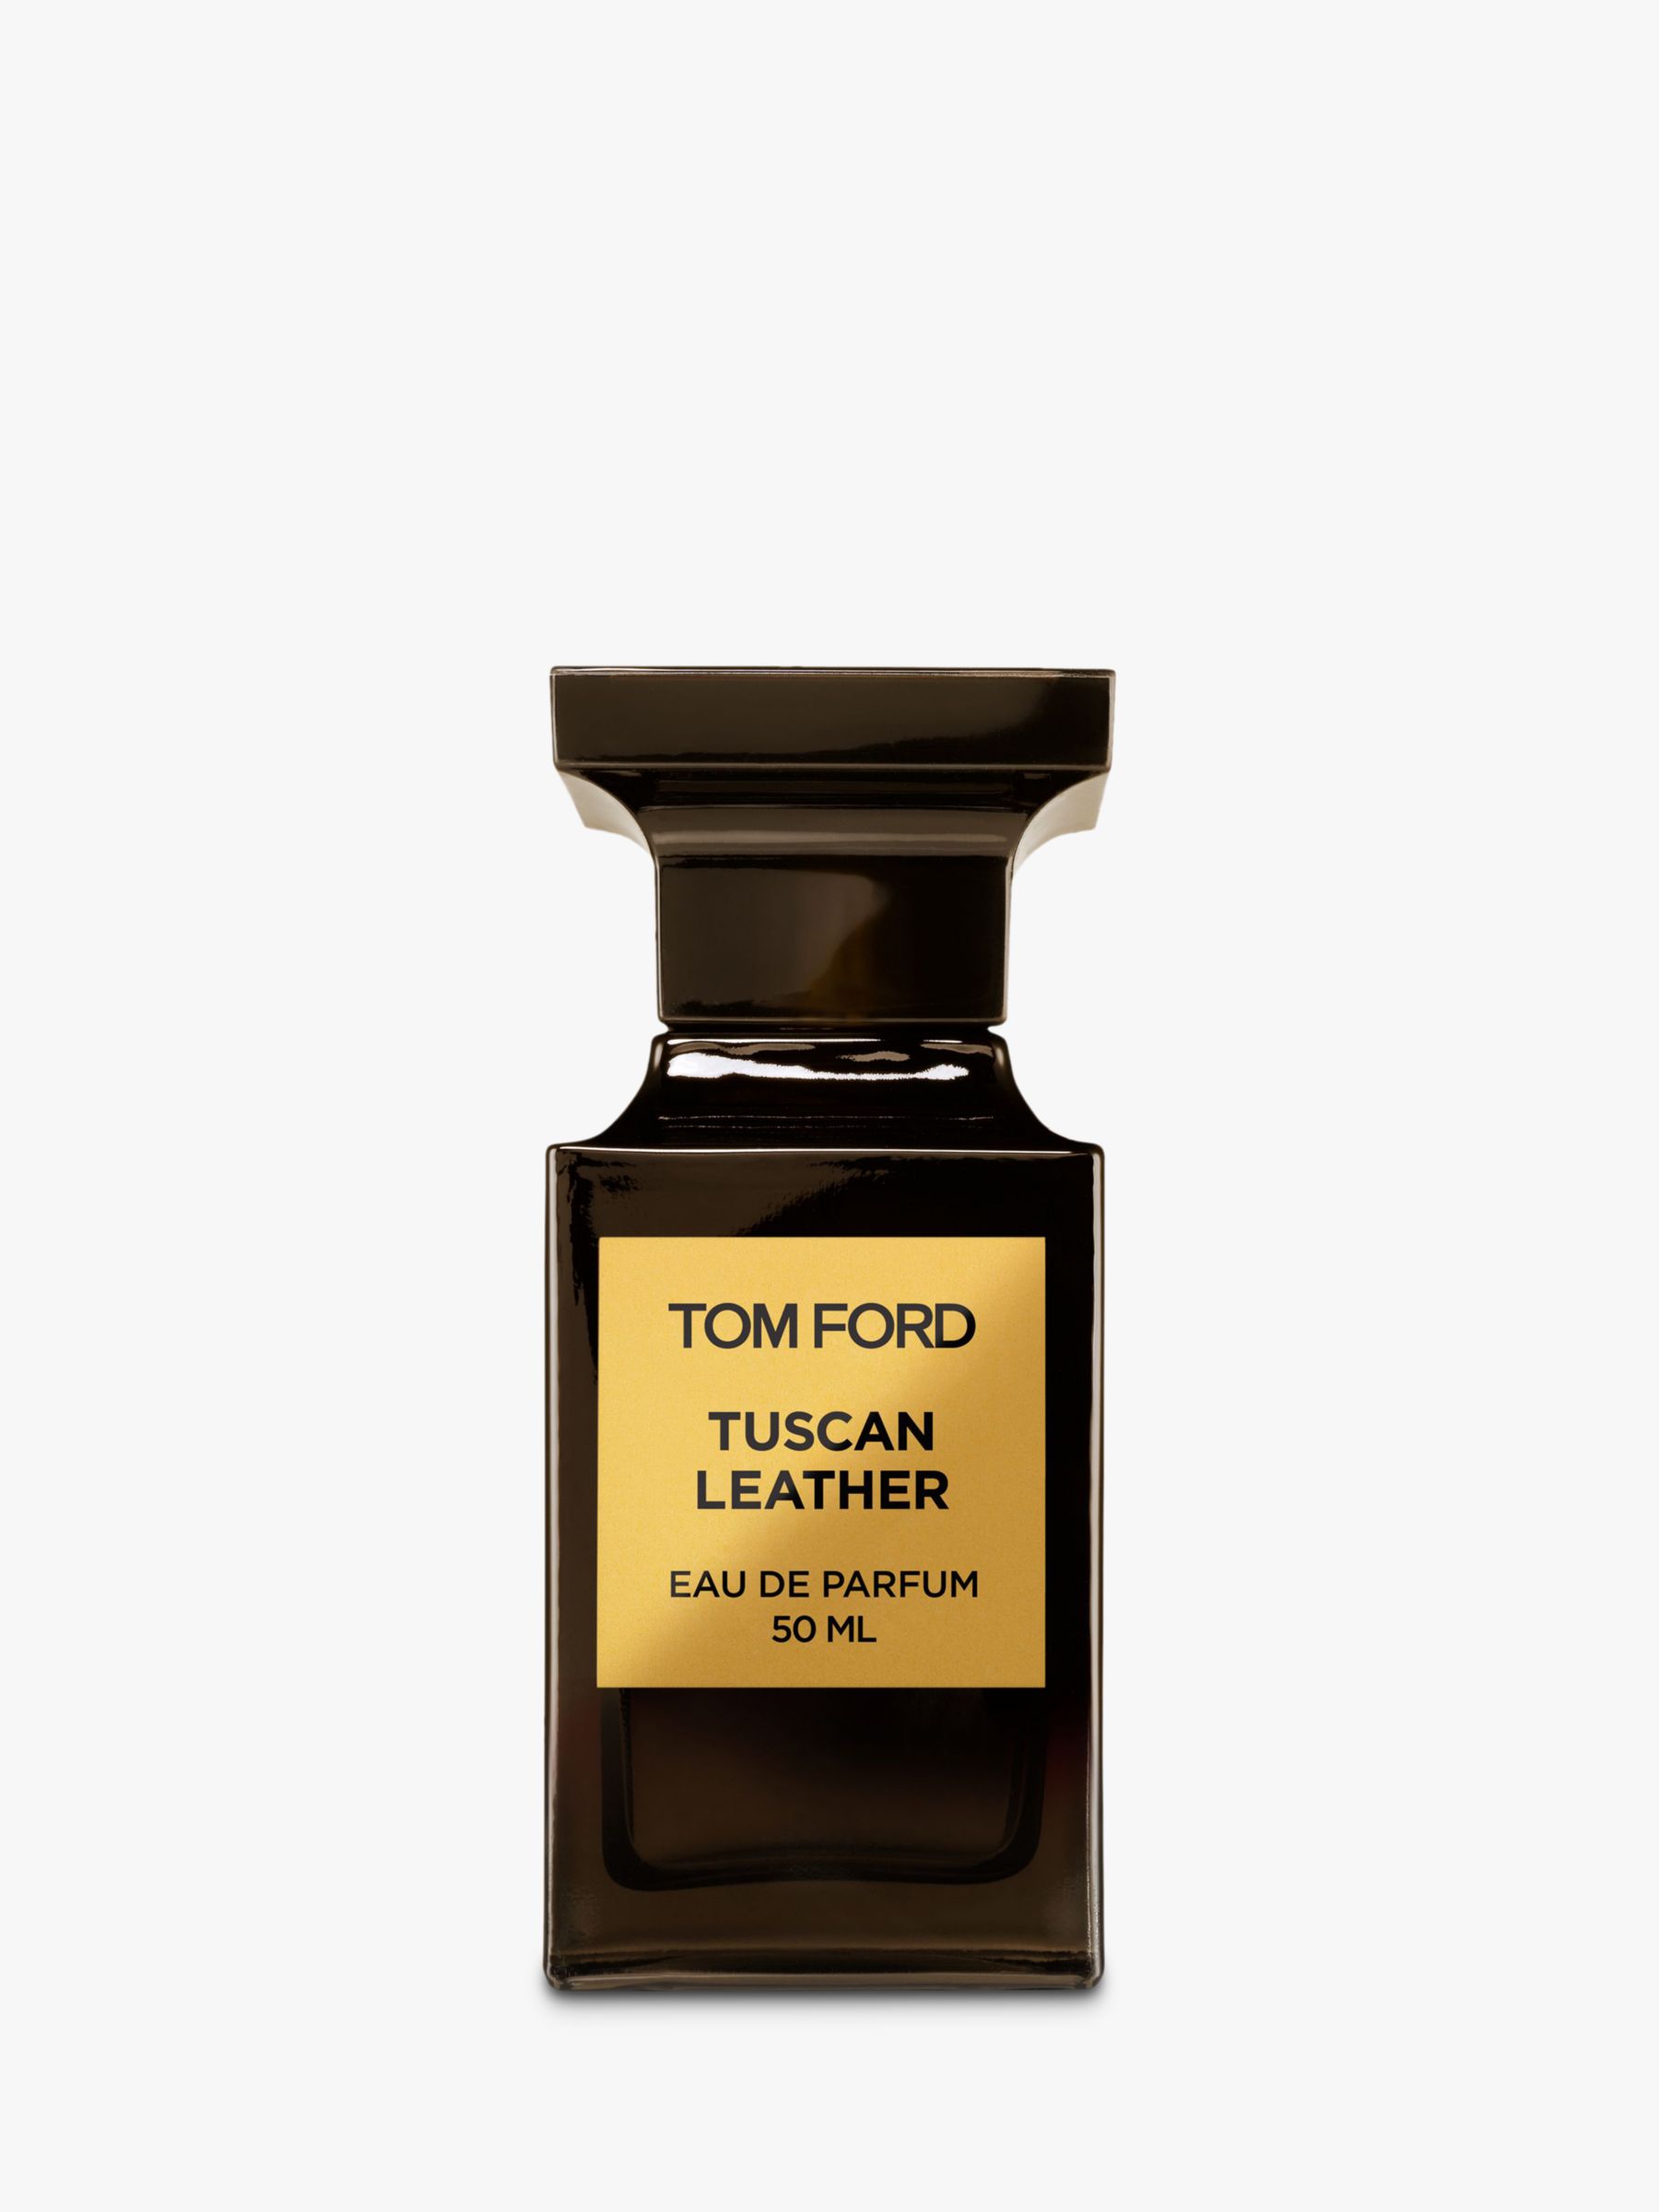 TOM FORD Private Blend Tuscan Leather Eau de Parfum, 50ml at John Lewis &  Partners